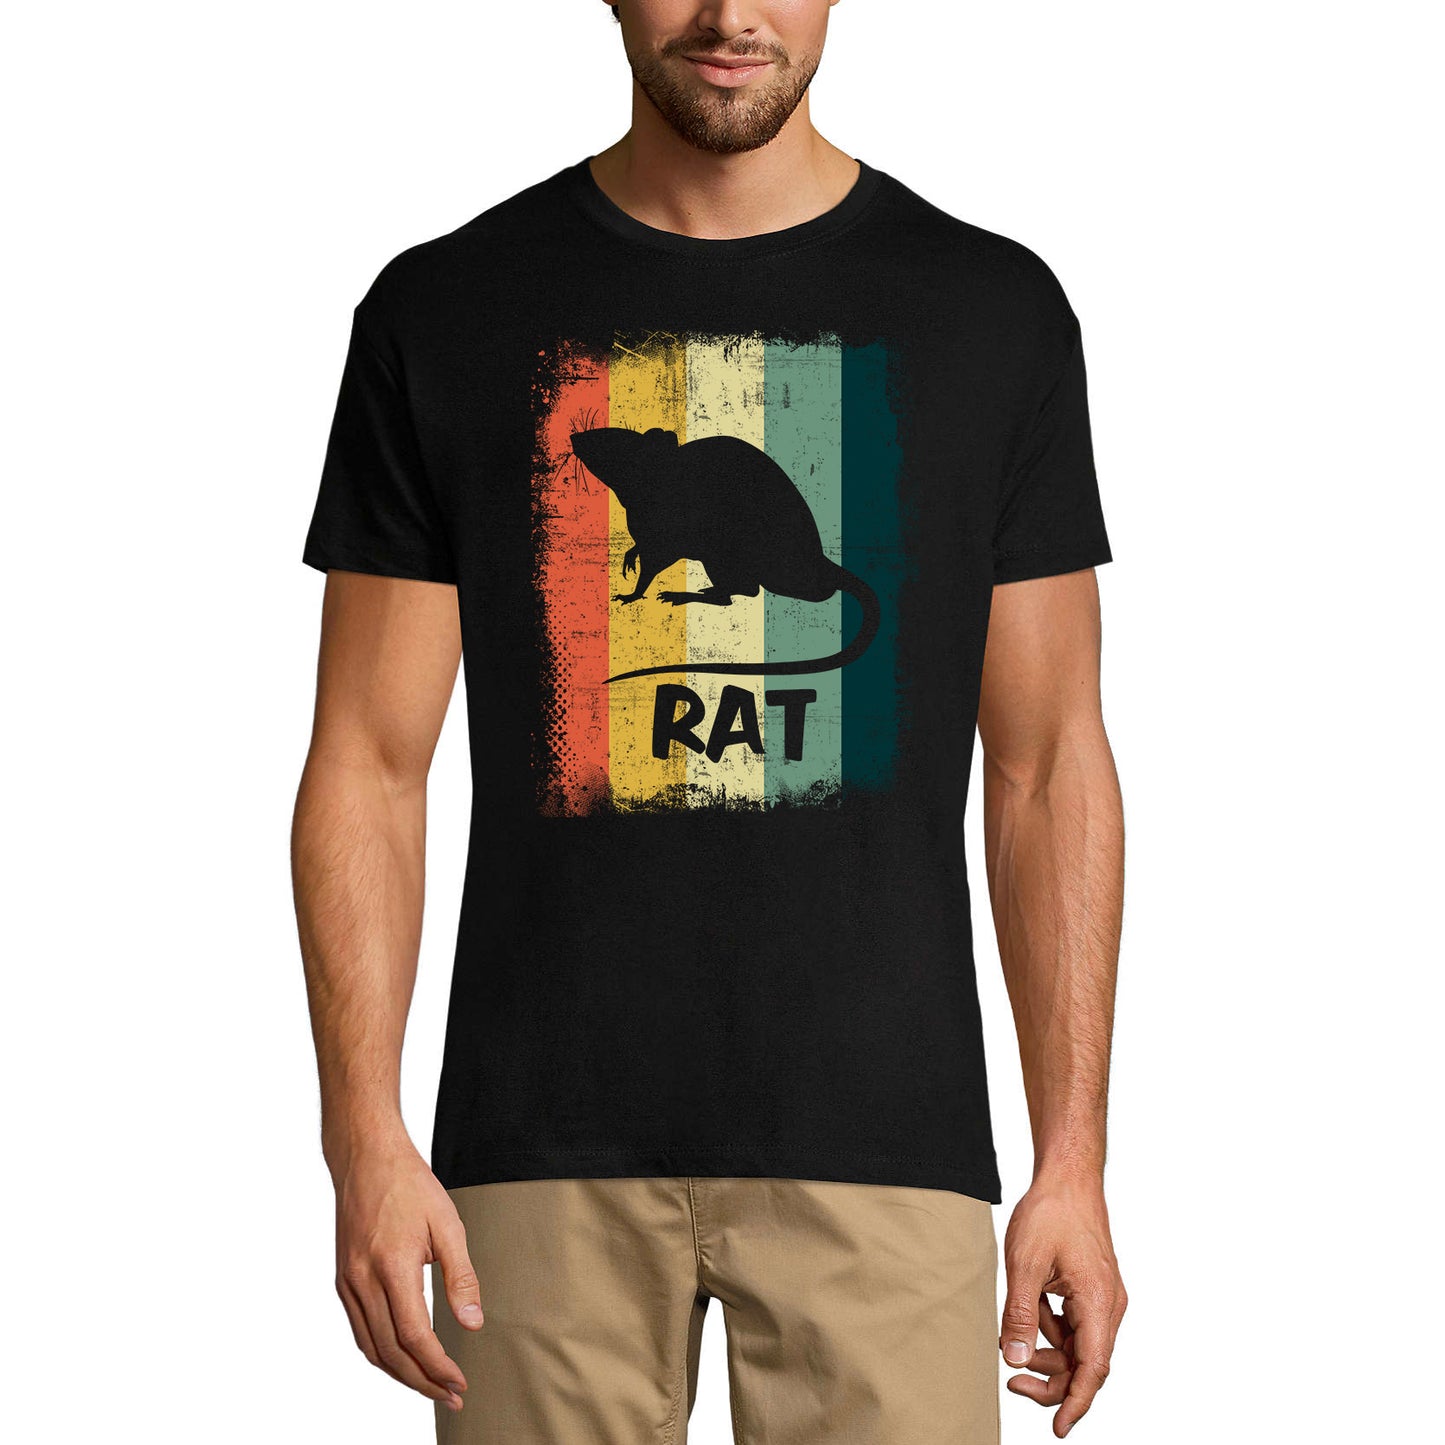 ULTRABASIC Men's Graphic T-Shirt Retro Rat - Vintage Tee Shirt